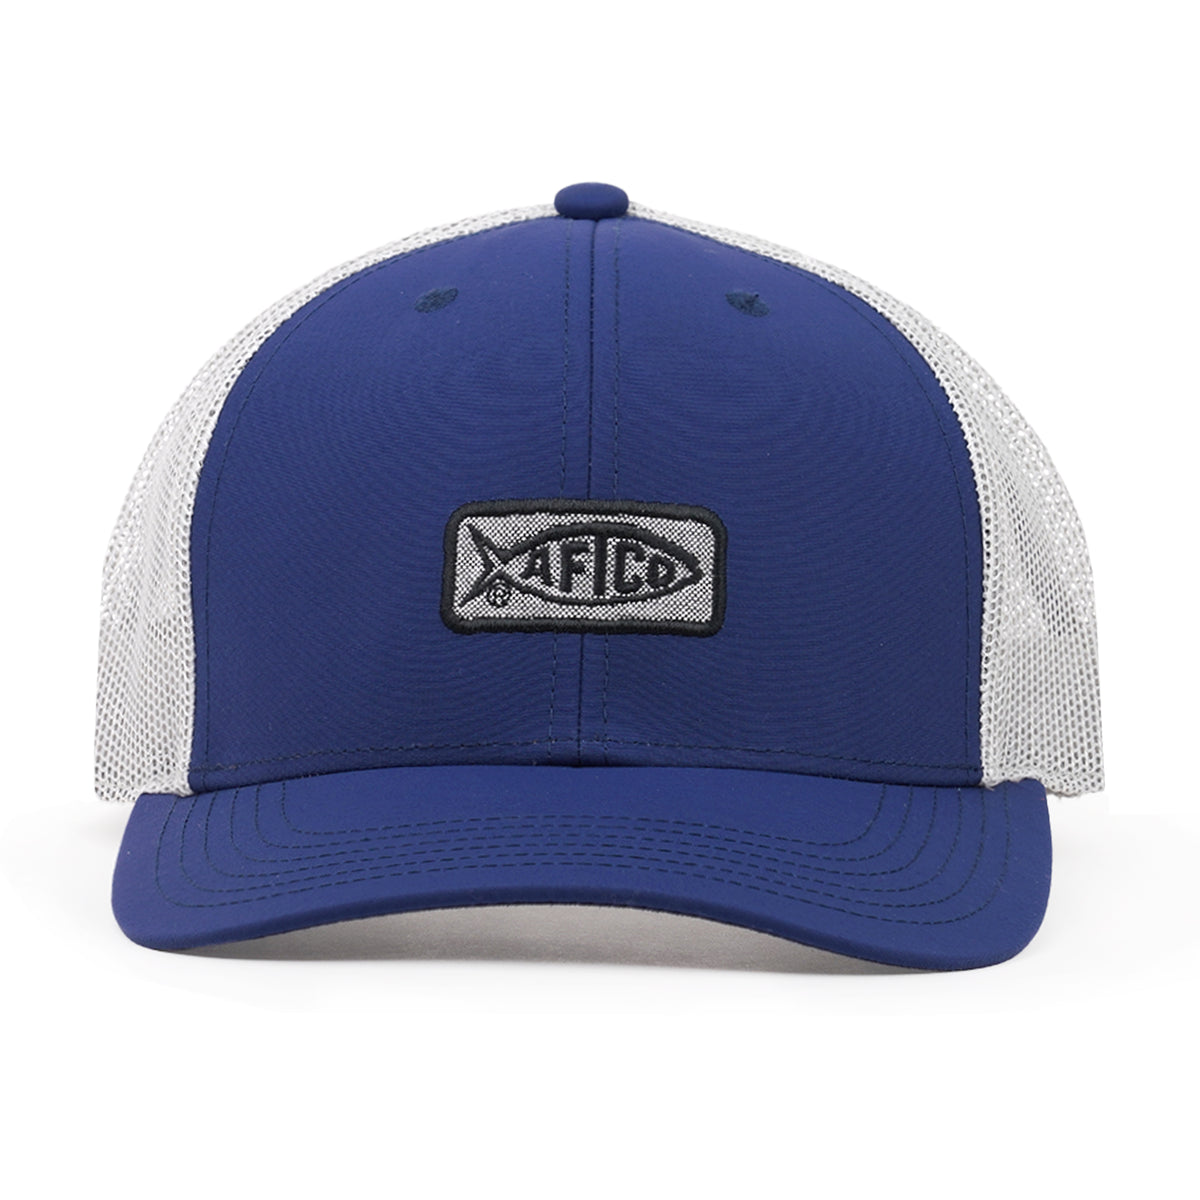 AFTCO Original Fishing Trucker Hat